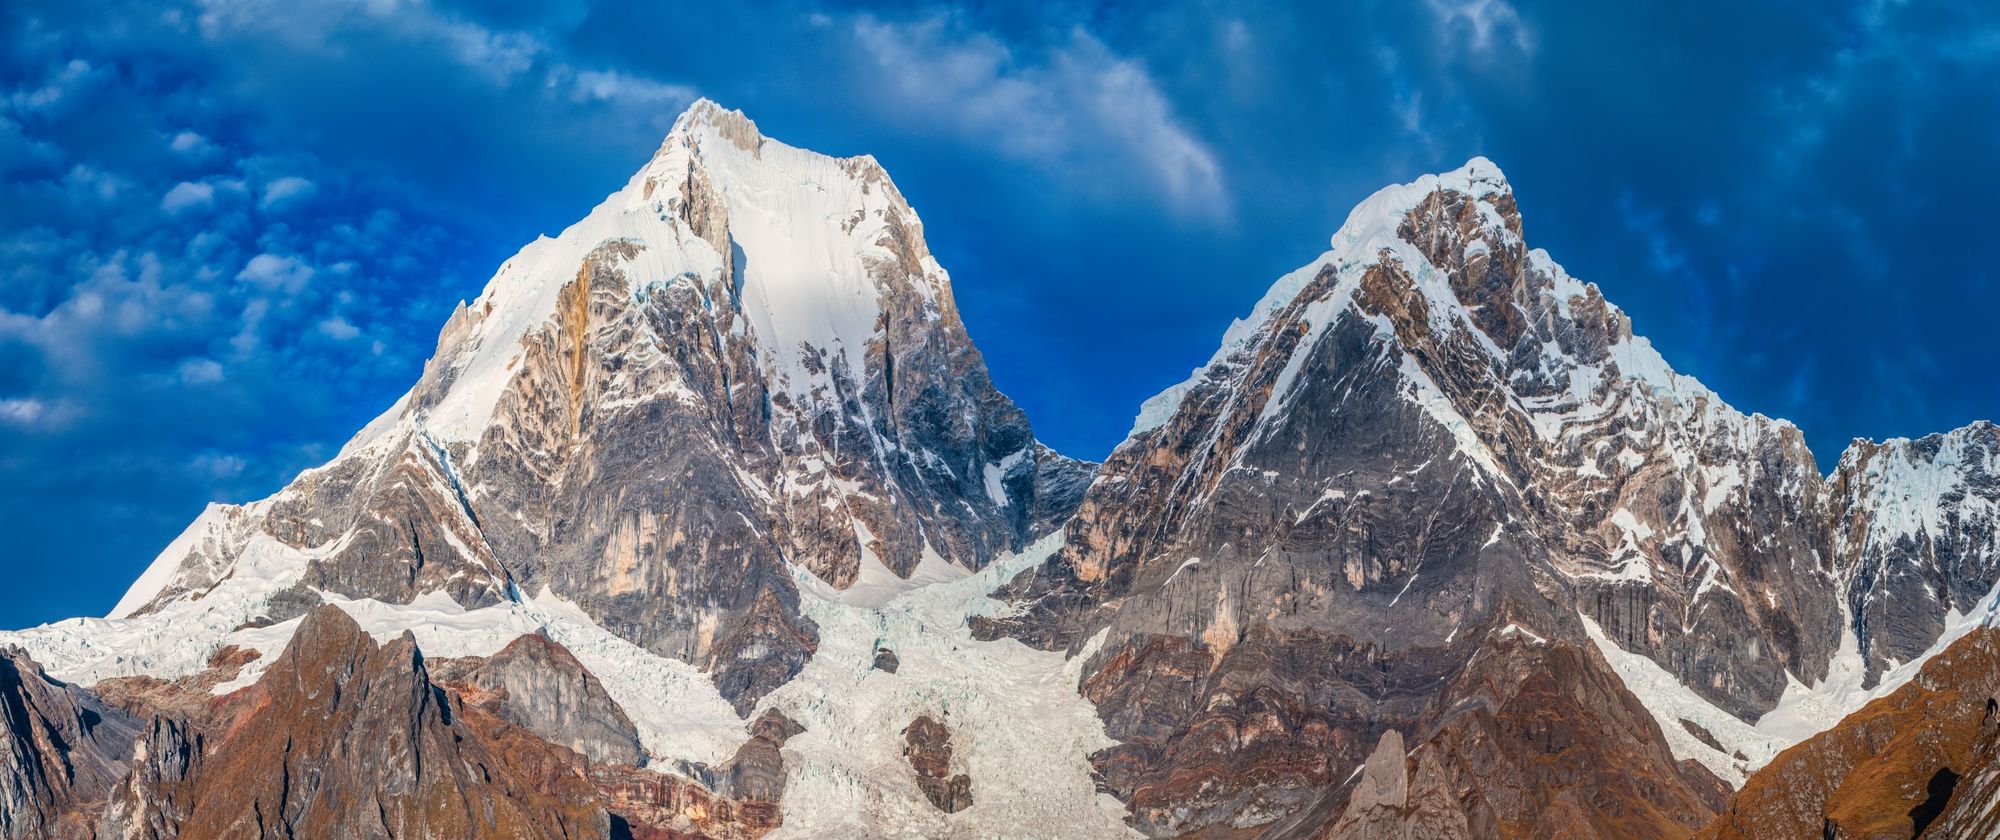 The stunning, jagged twin peaks of Mount Yerupaja in Peru. Photo: Getty